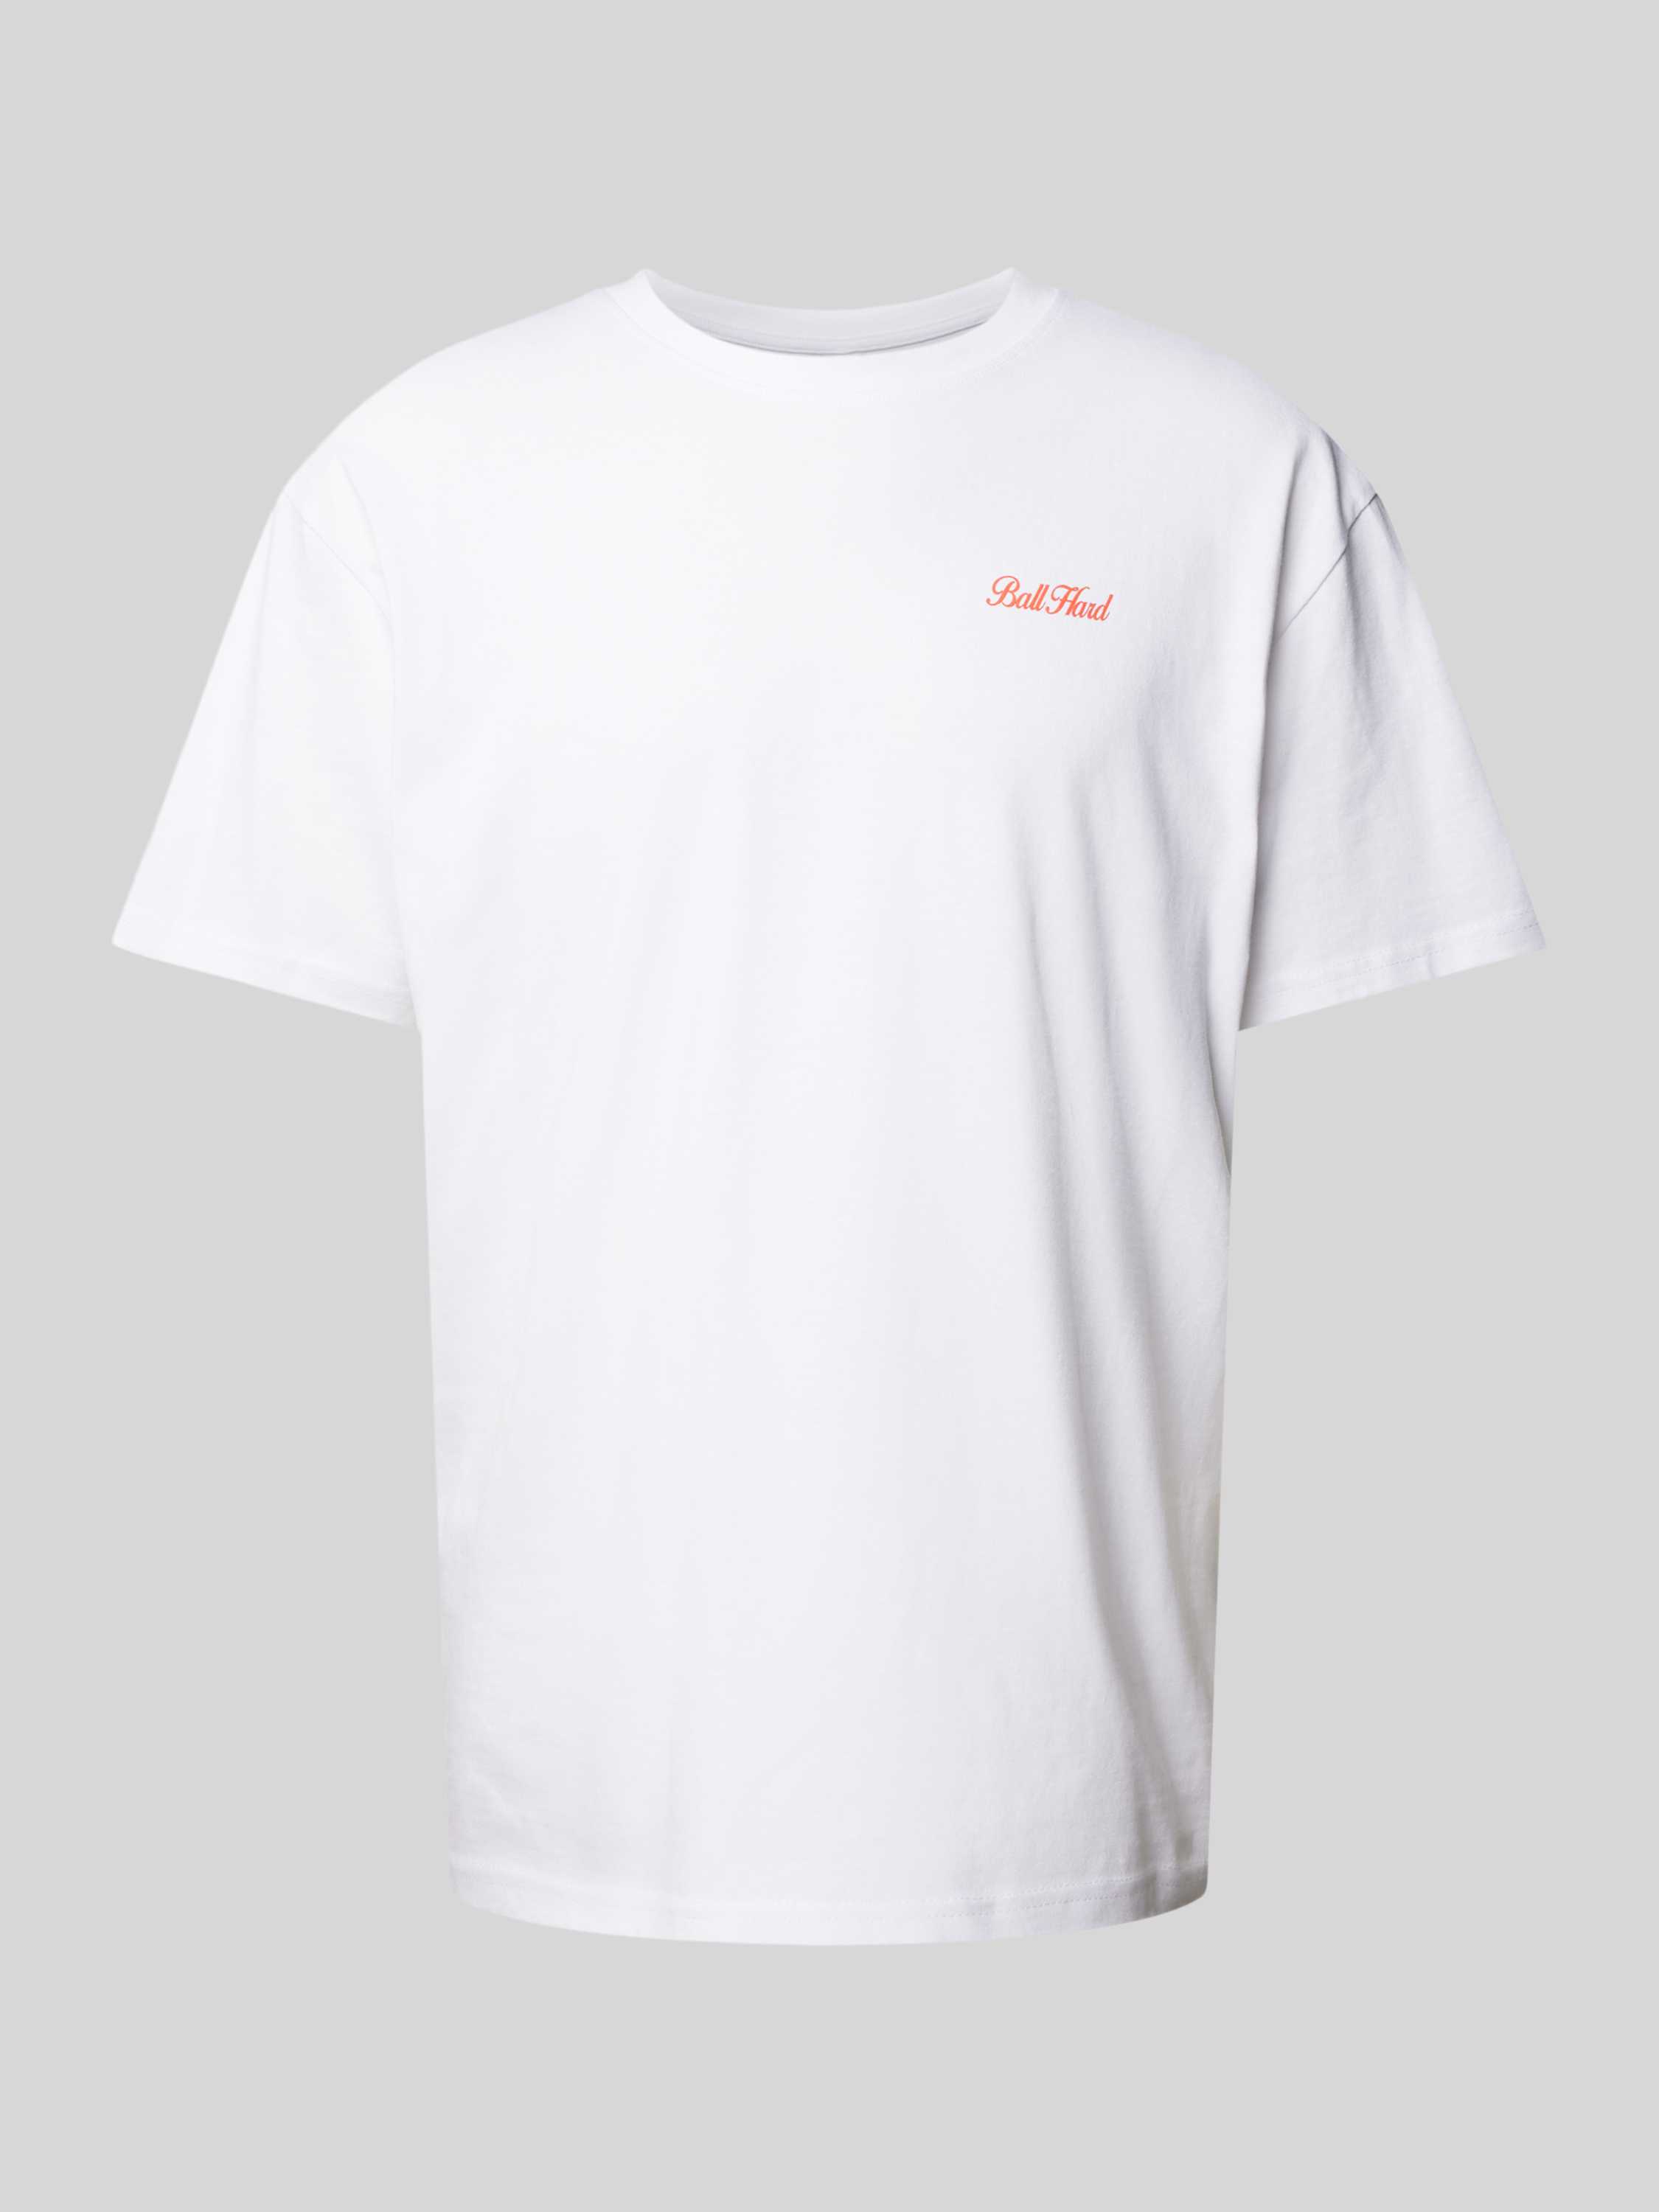 Oversized T-Shirt mit Statement-Print Modell 'Ball Hard'